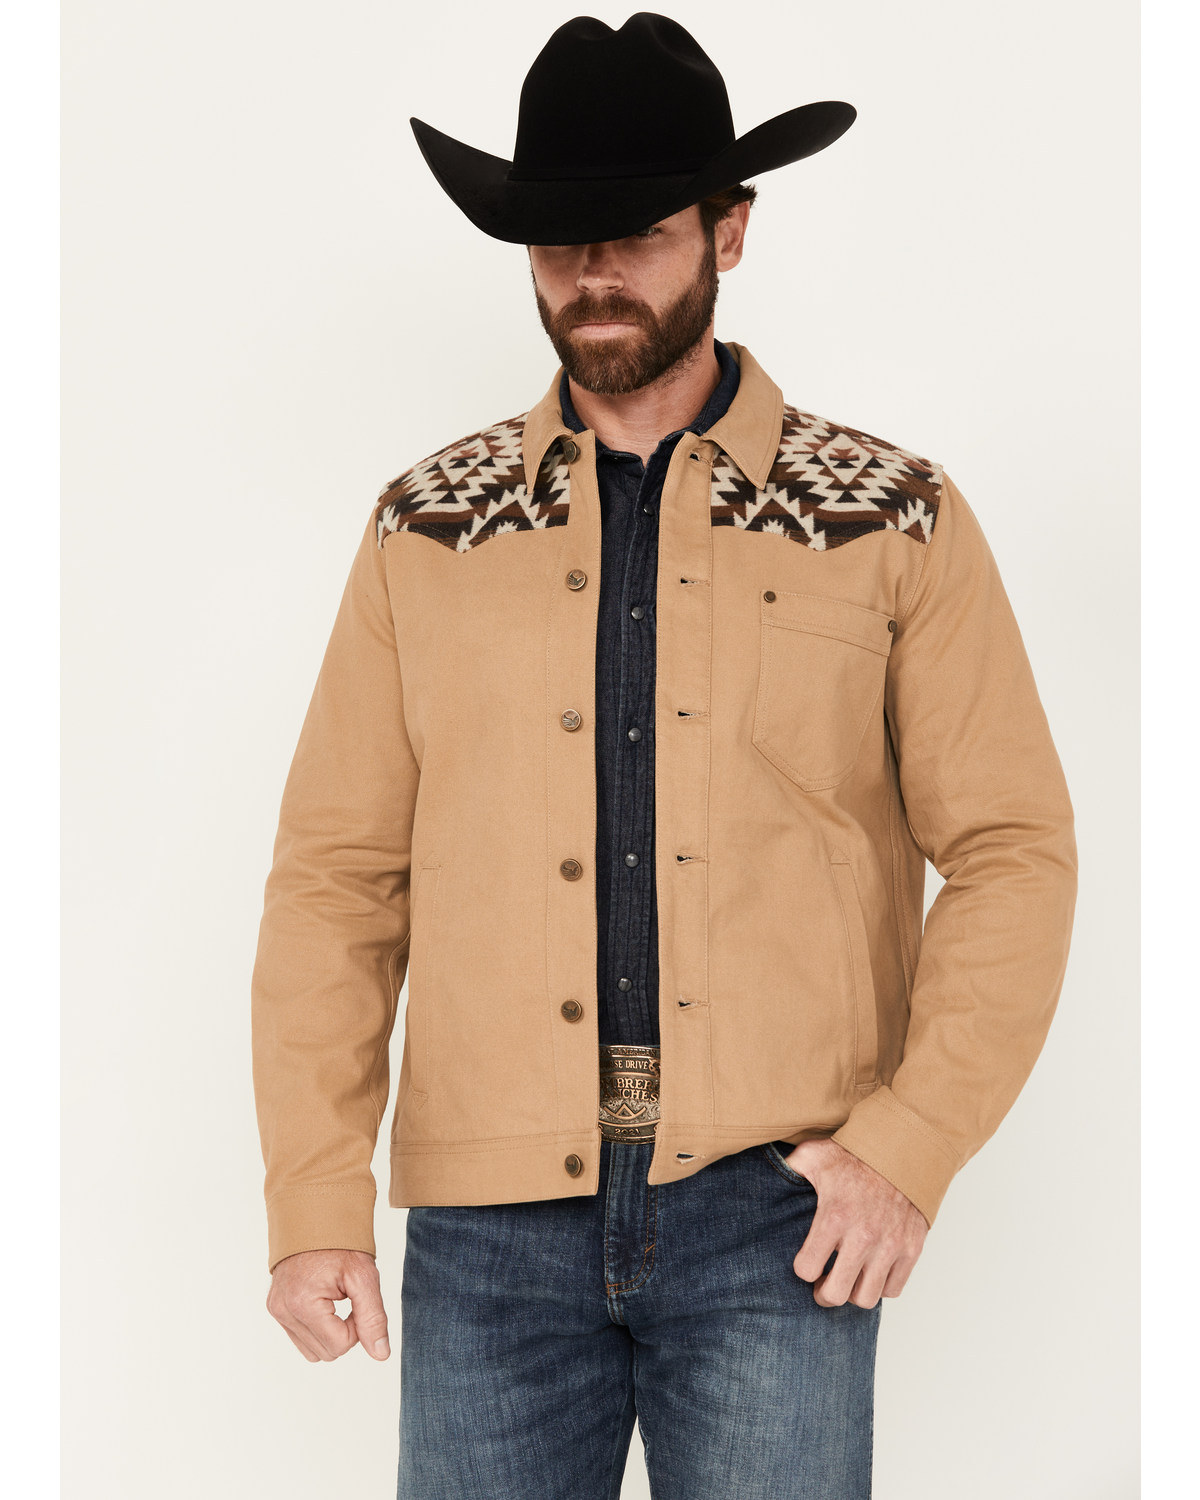 Cody James Men's Southwestern Print Canvas Button-Down Jacket